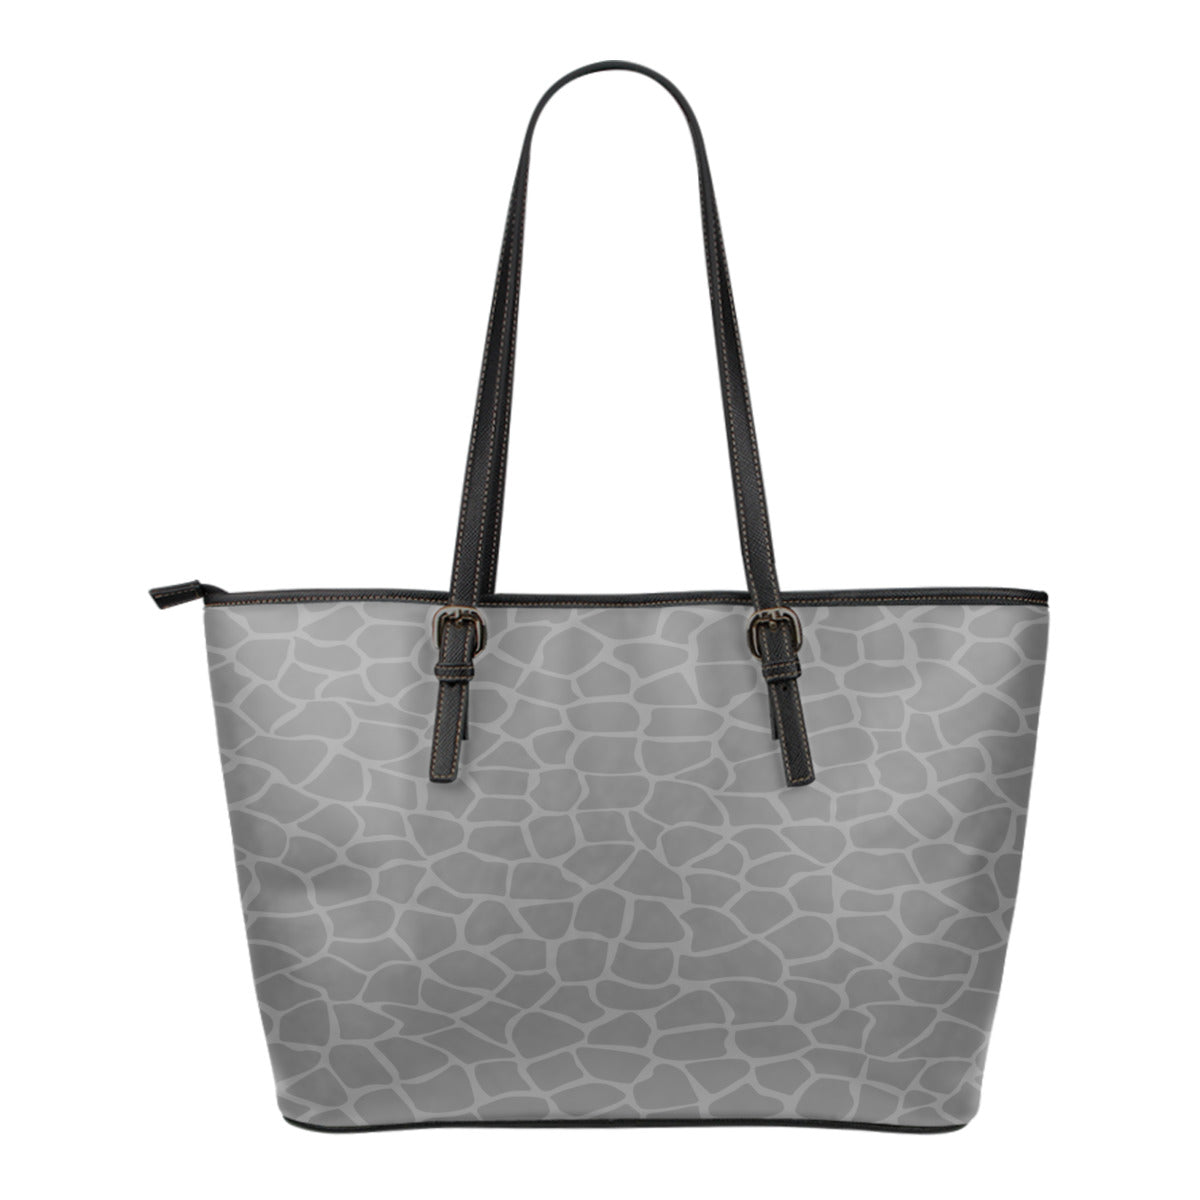 Animal Print BW Themed Design C4b Women Small Leather Tote Bag